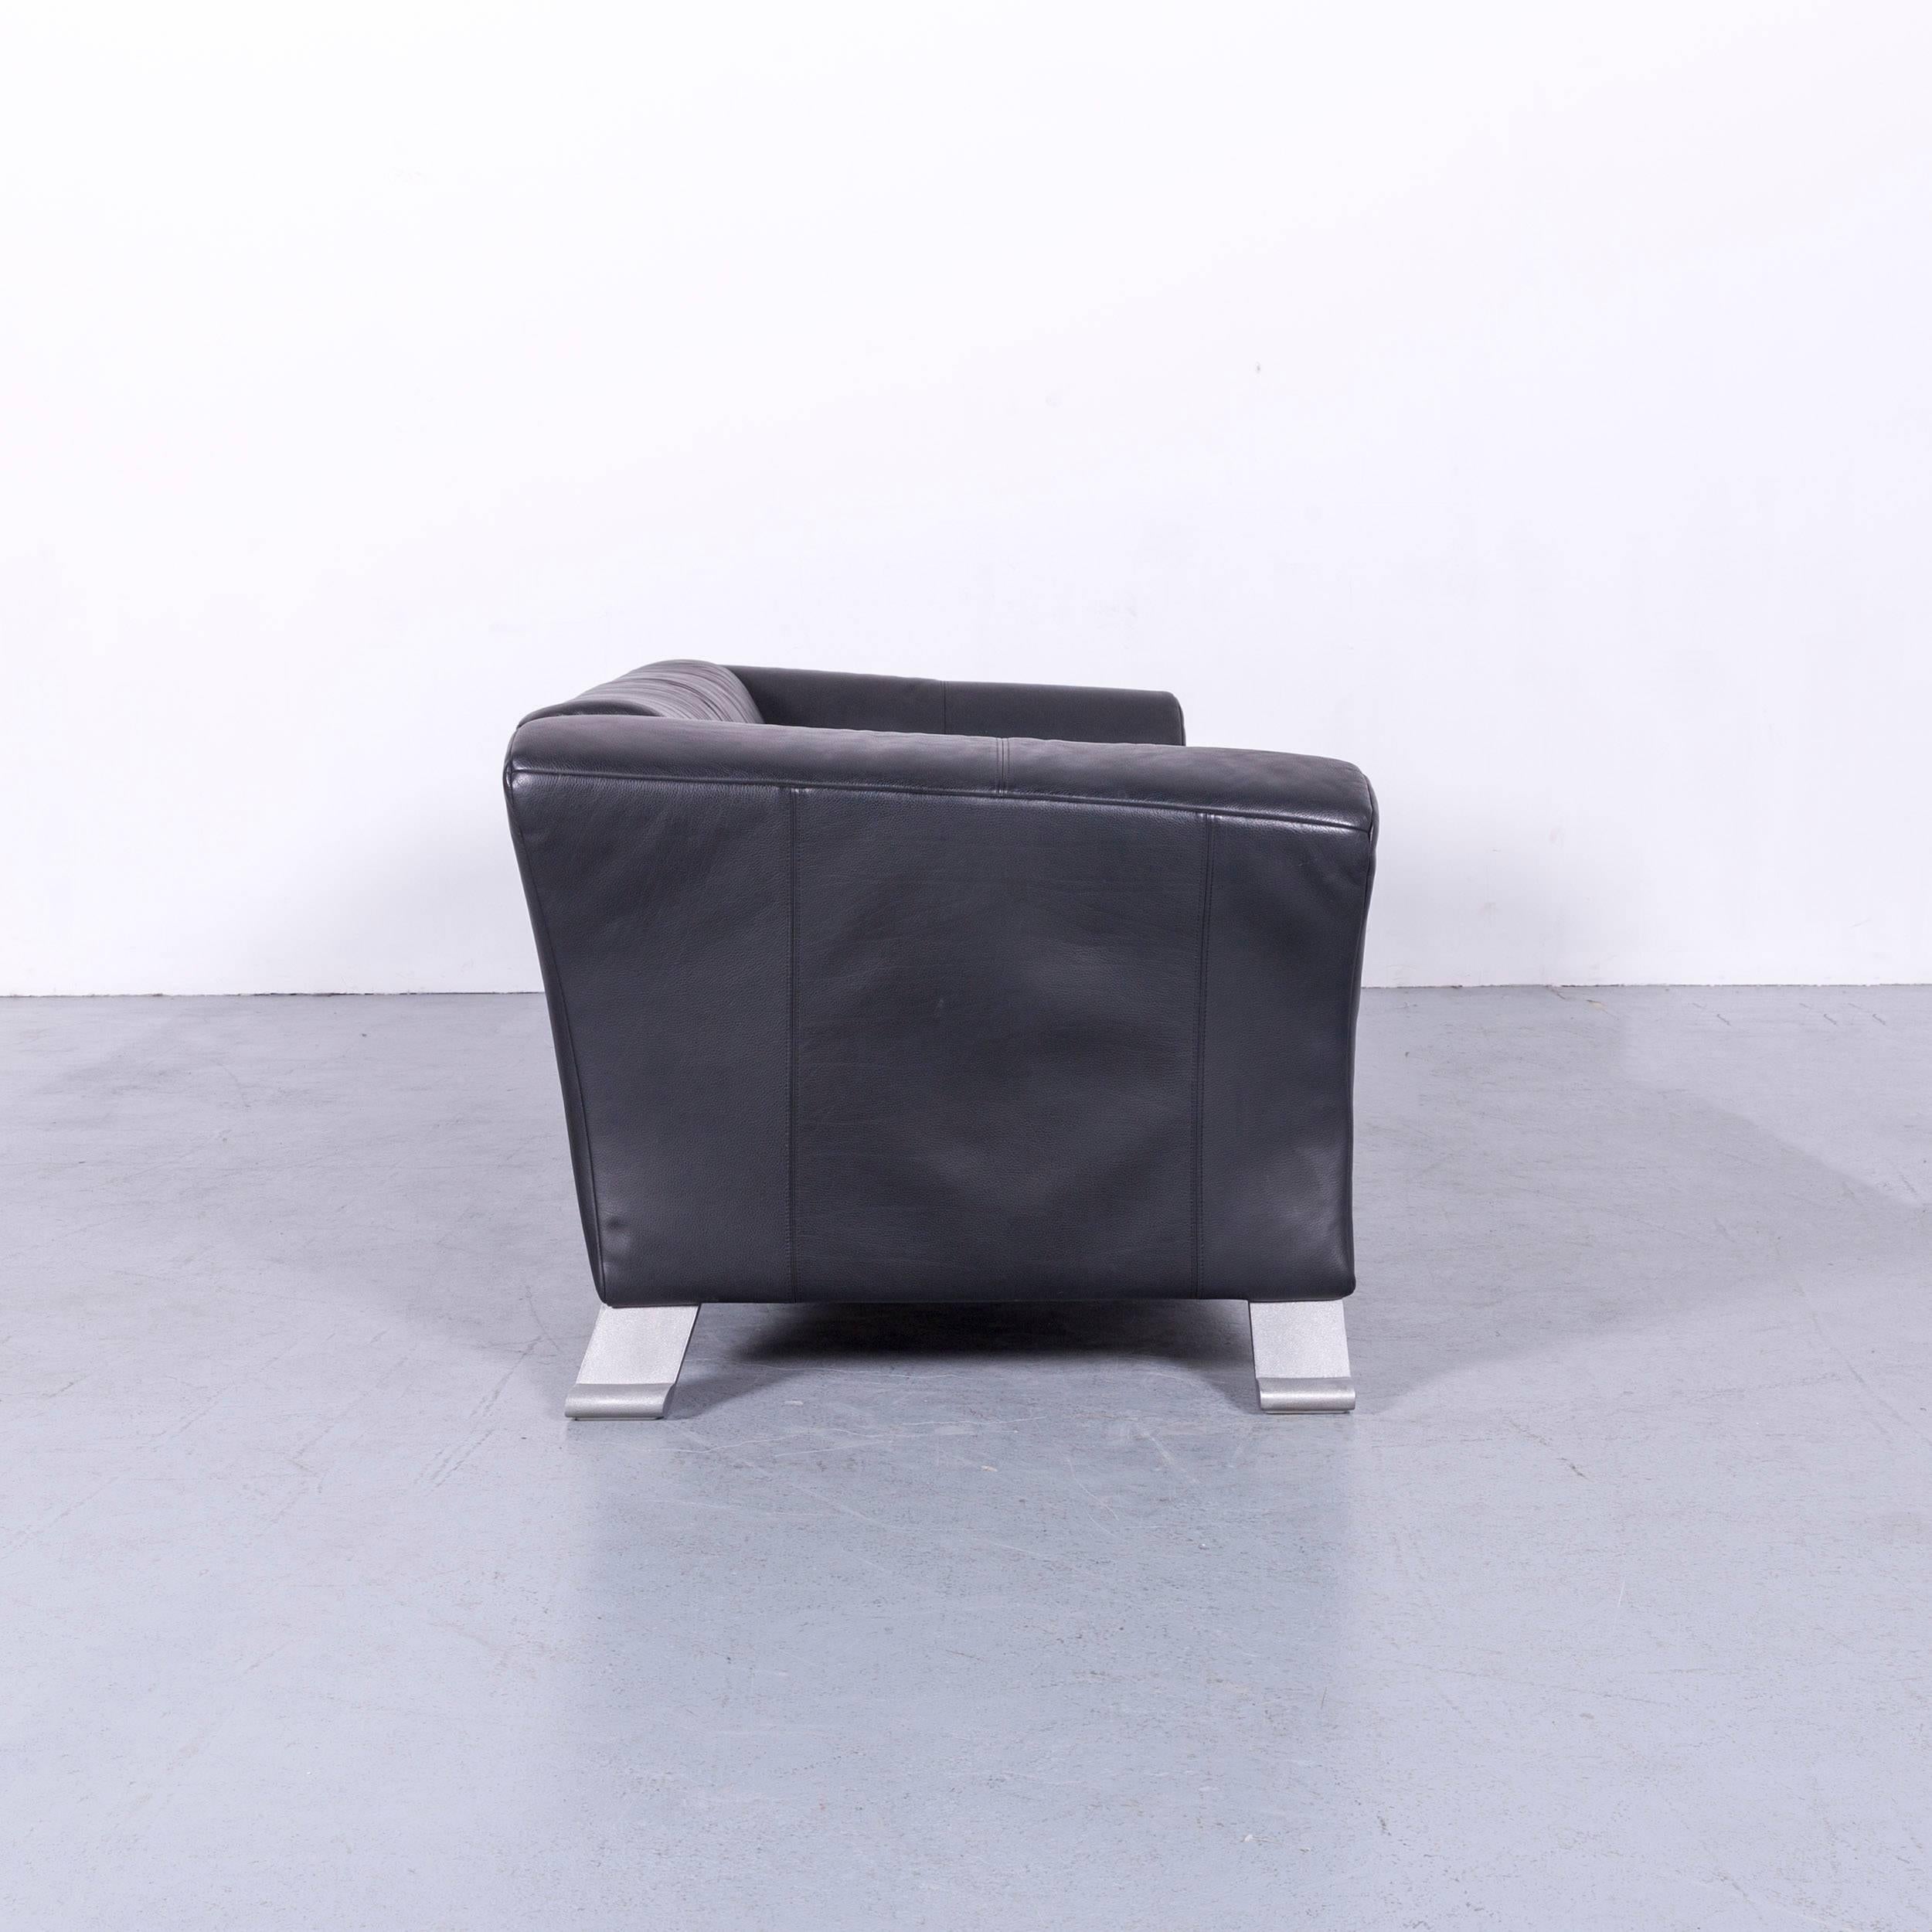 Rolf Benz 322 Designer Sofa Black Three-Seat Leather Modern Couch Metal Feet 2